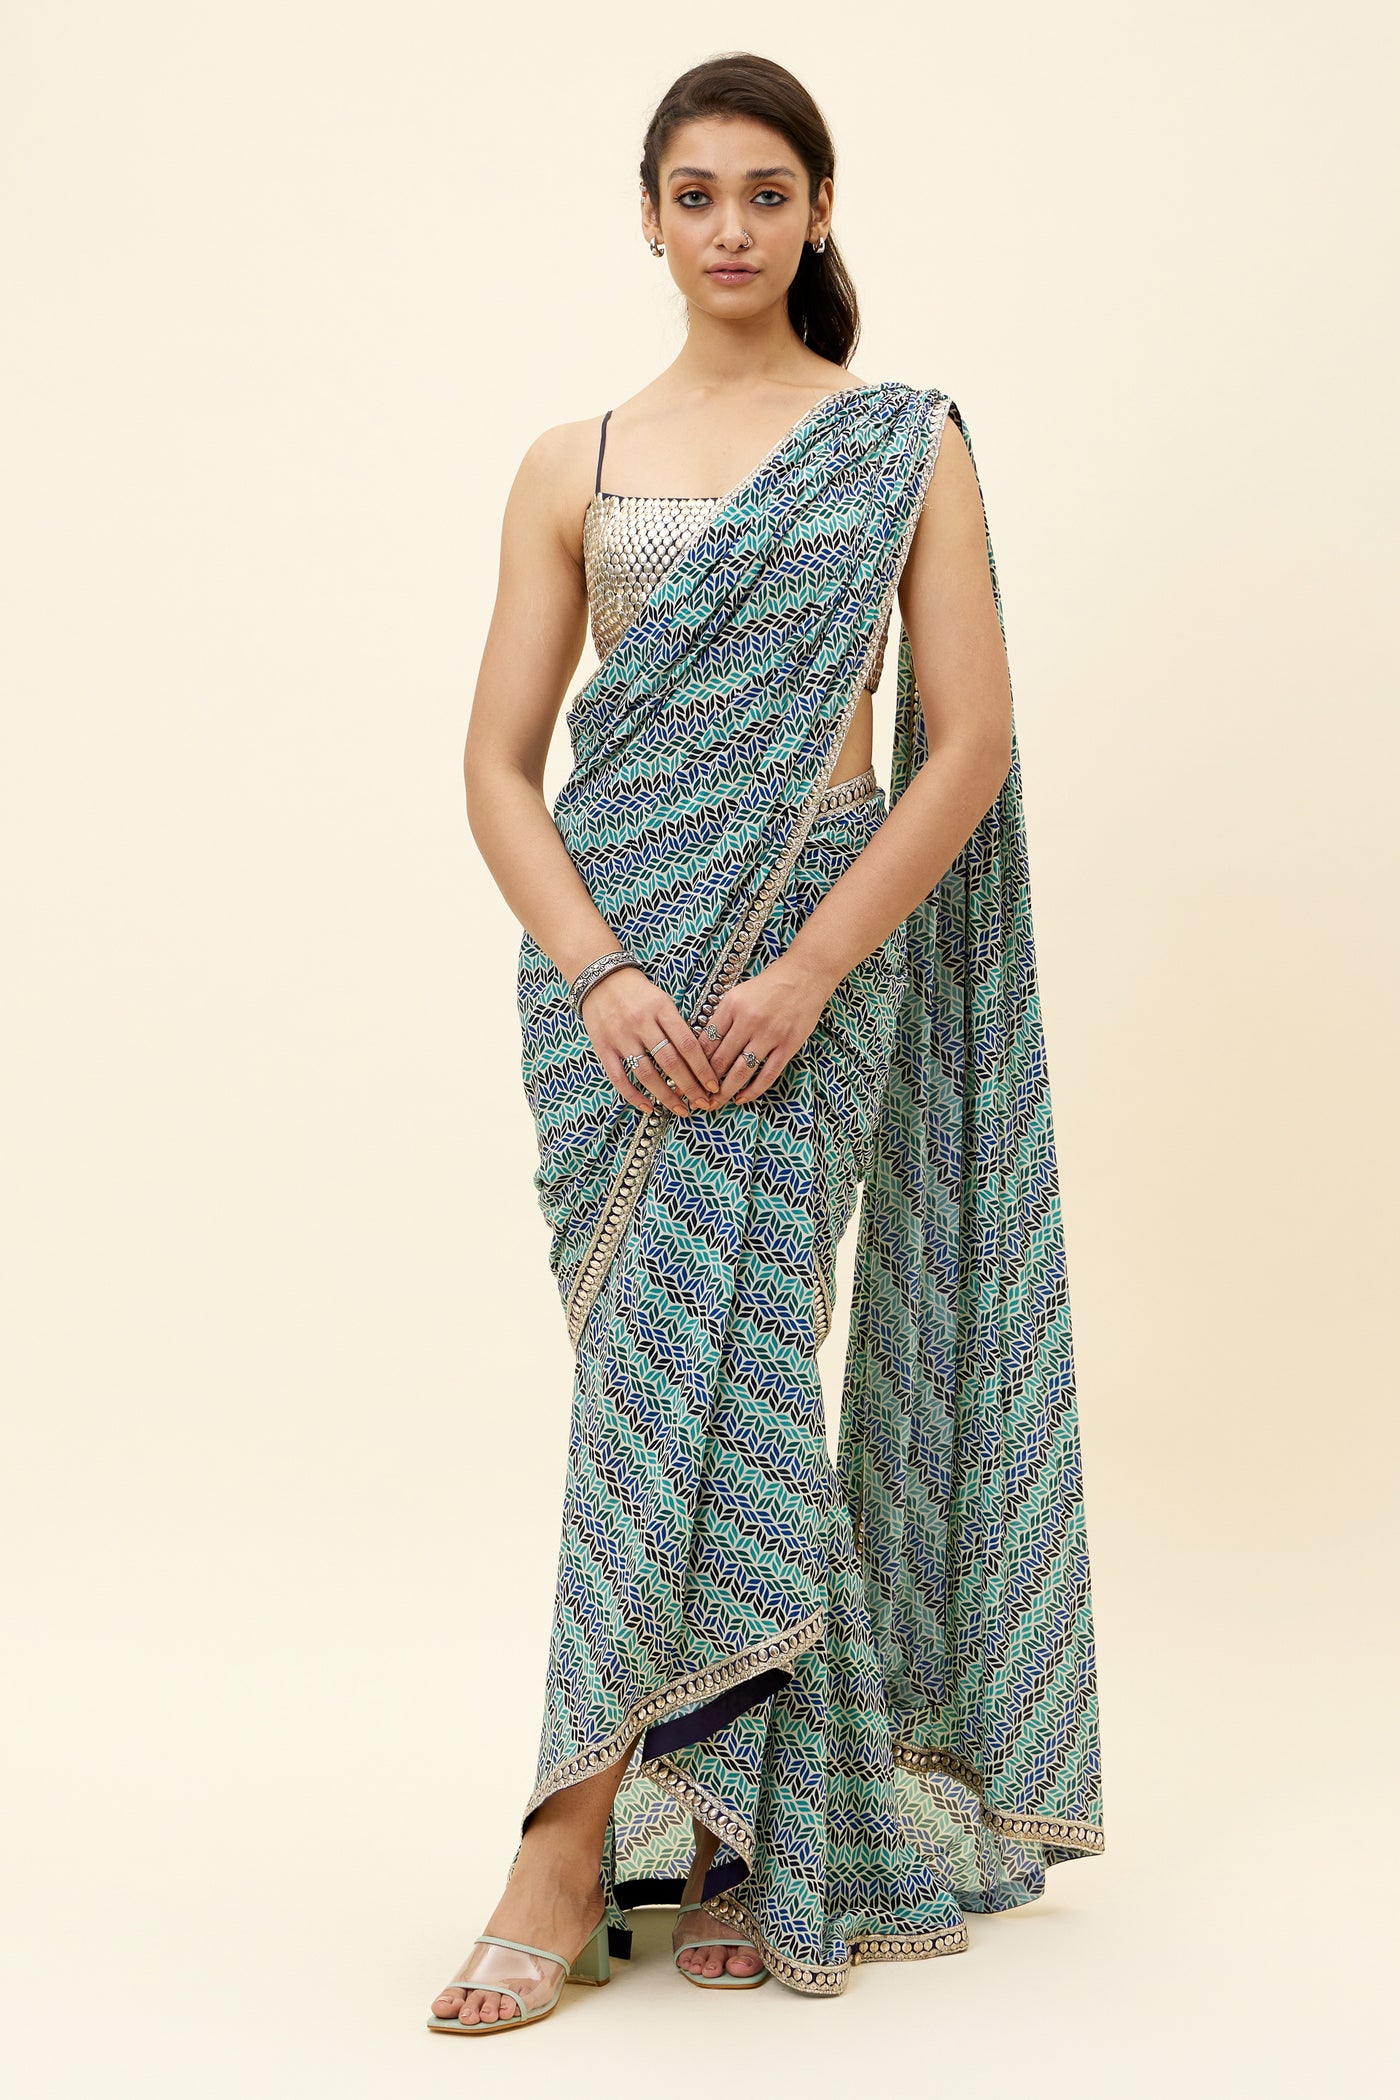 sva Beige Leaf Print Pre Stitched Cascade Saree With Blouse online shopping melange singapore indian designer wear